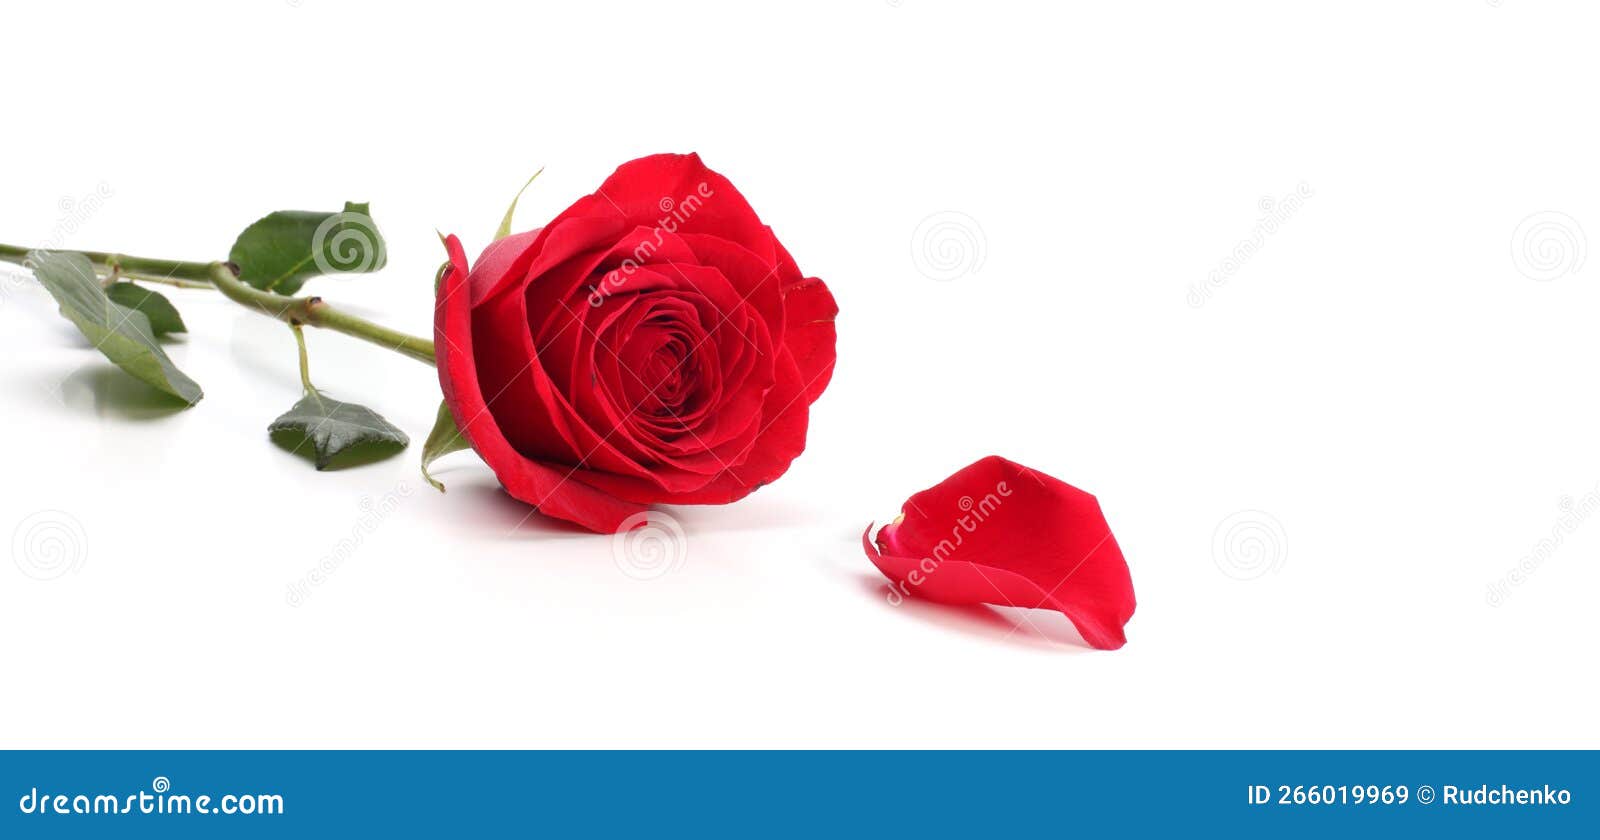 rea rose flower on white horizontal long background